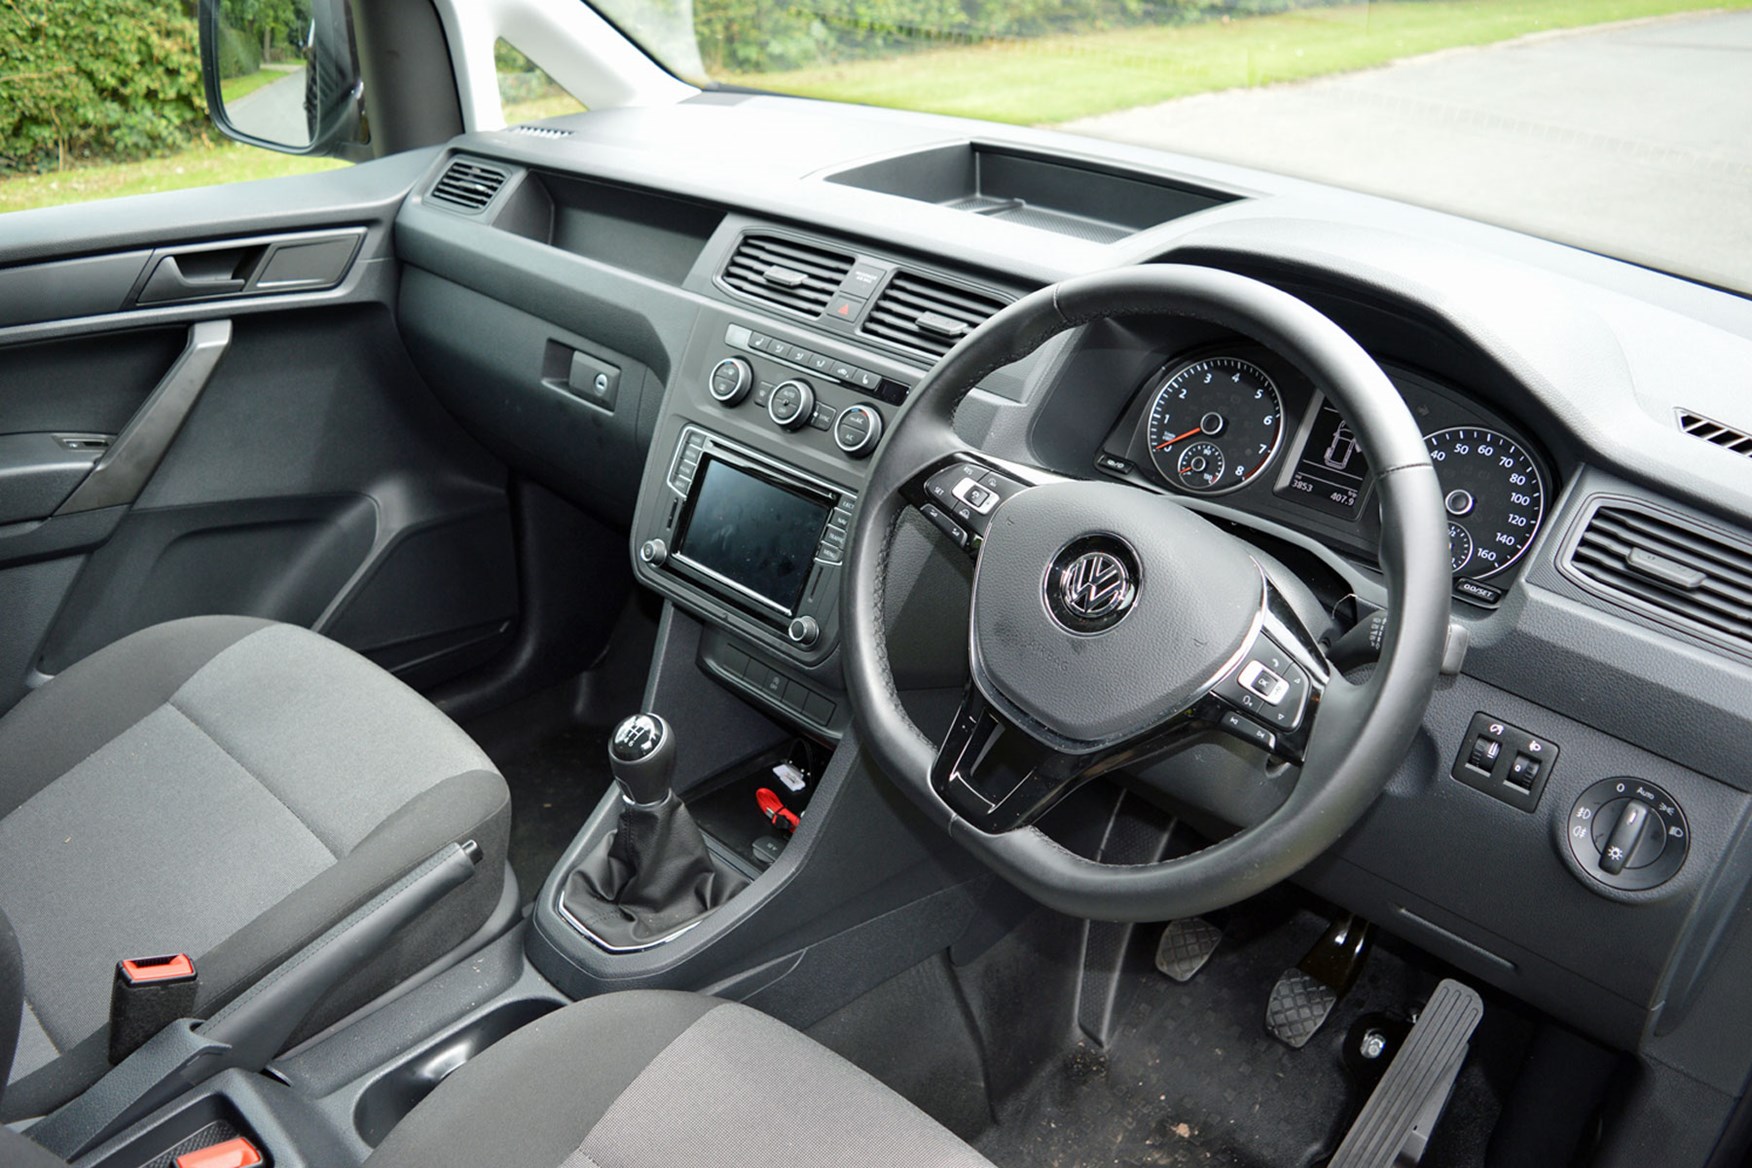 VW Caddy 1.4-litre TSI 125 review - Highline cab interior, 2016